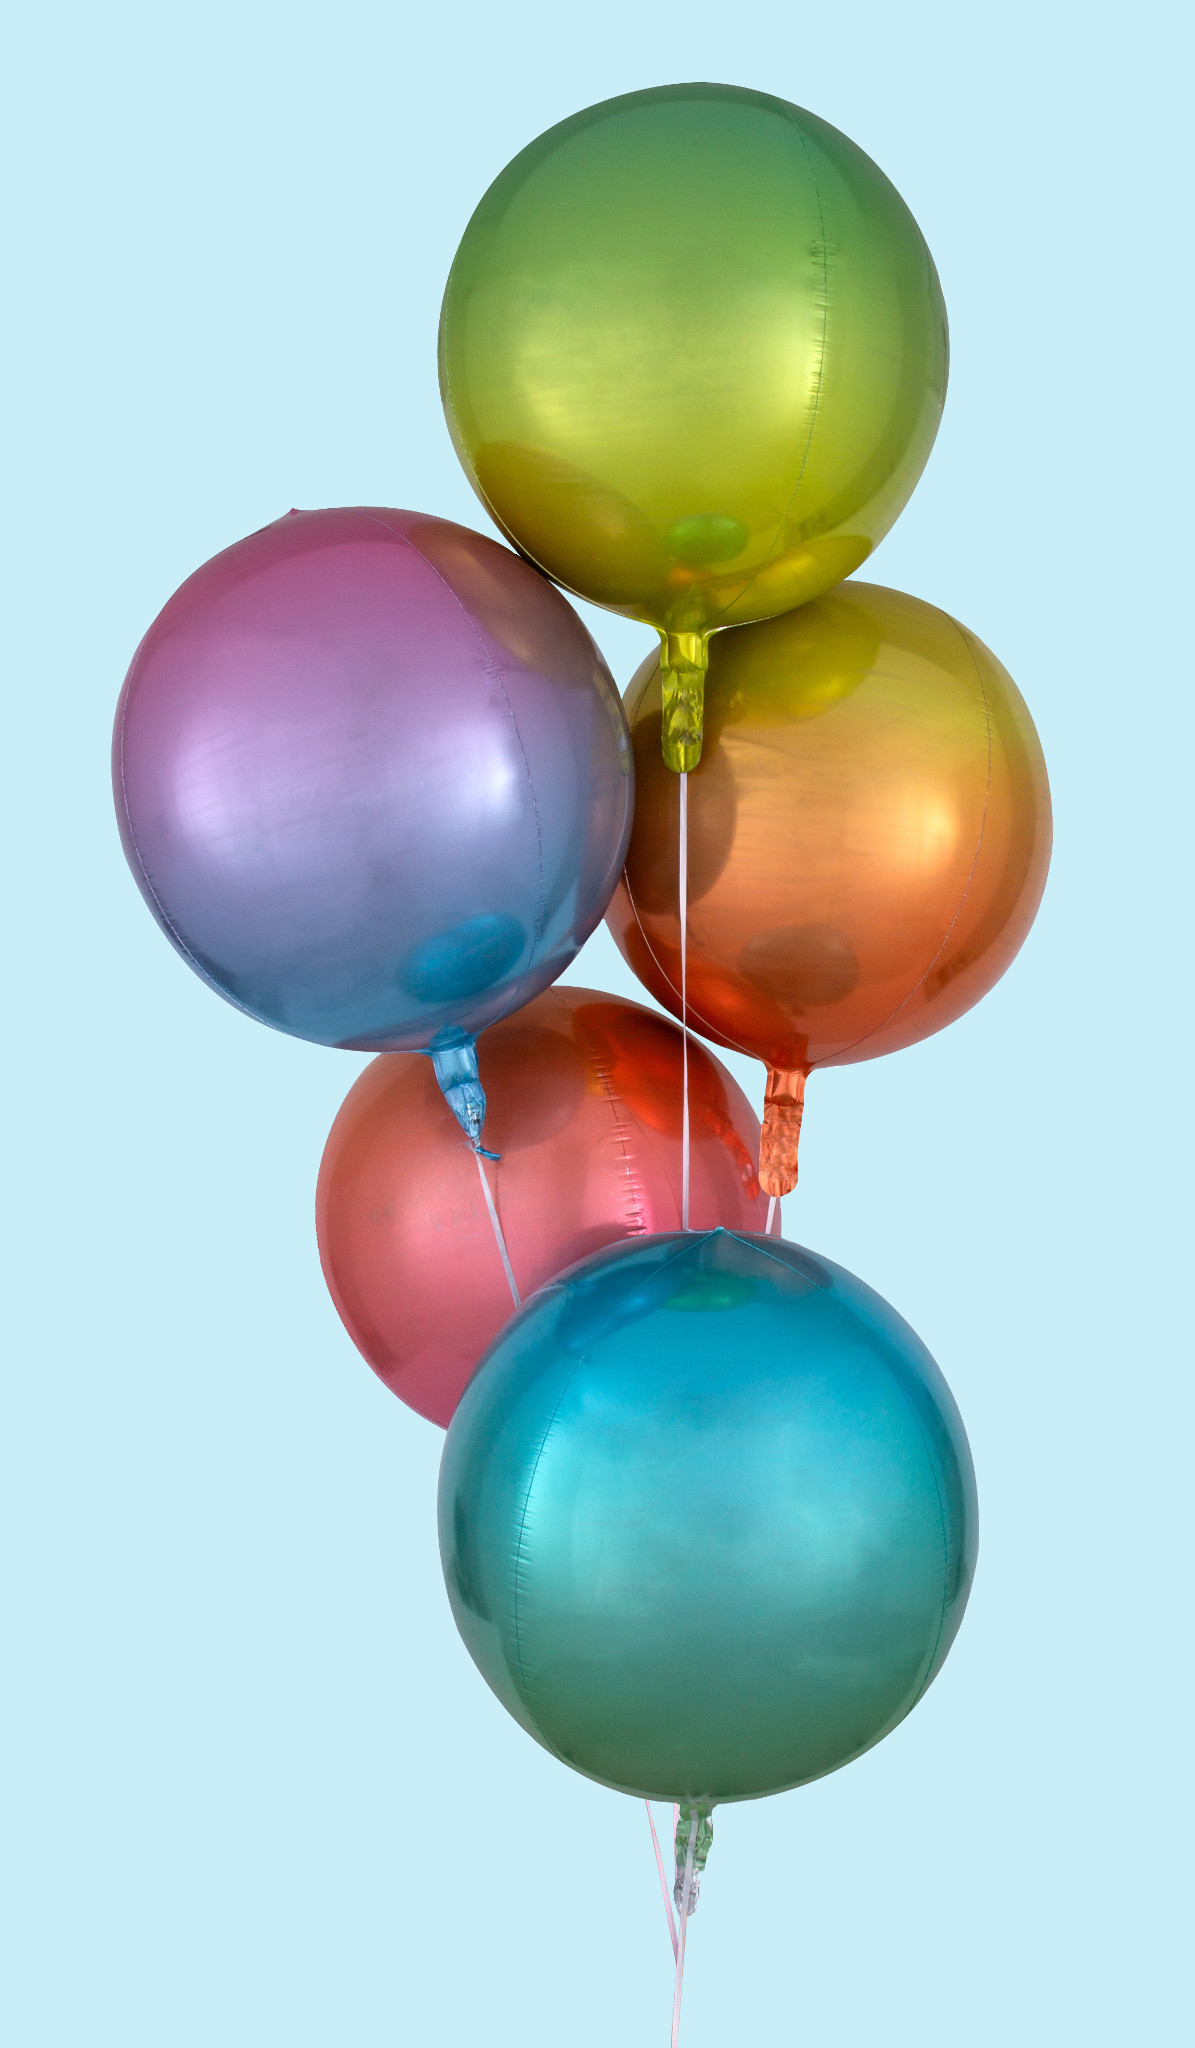 Foliový balónek koule modro-zelená 38 cm